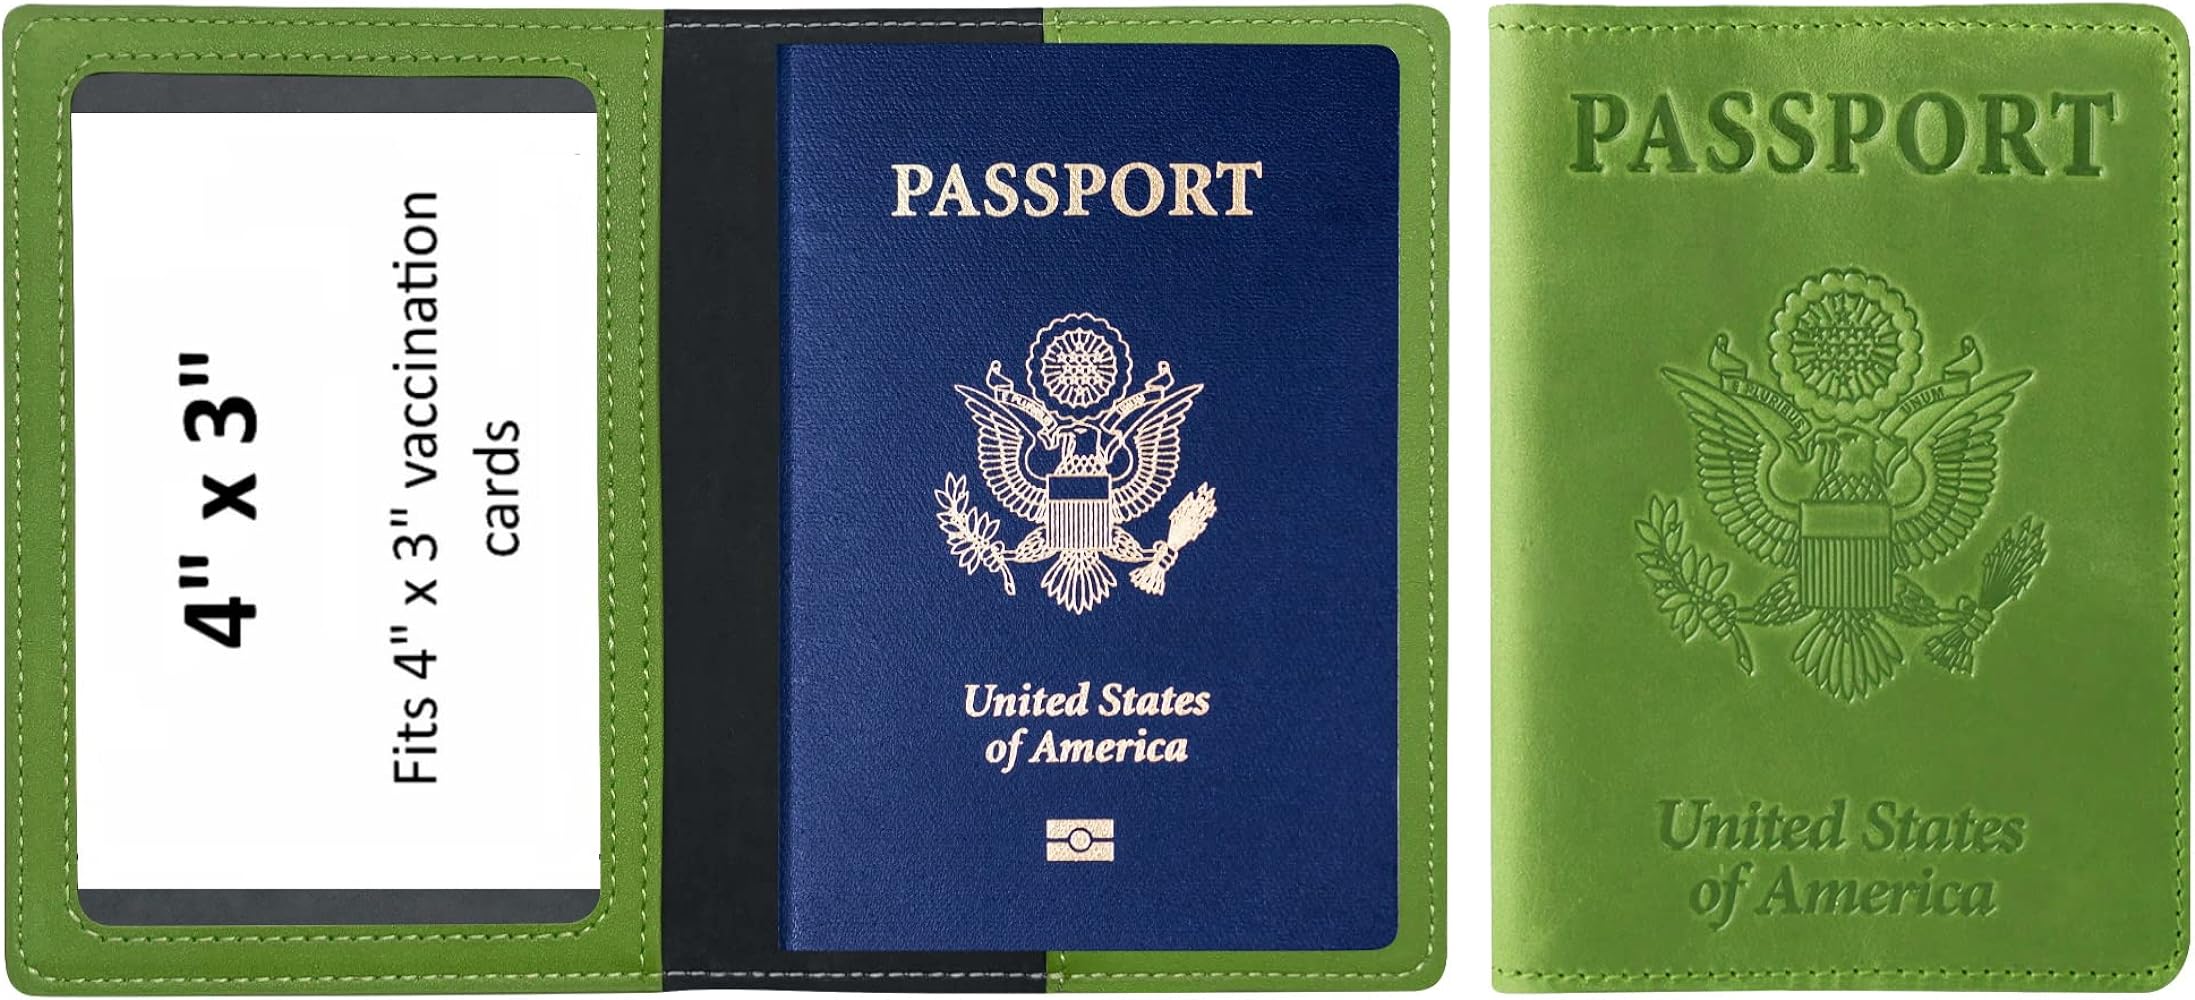 green card in passport